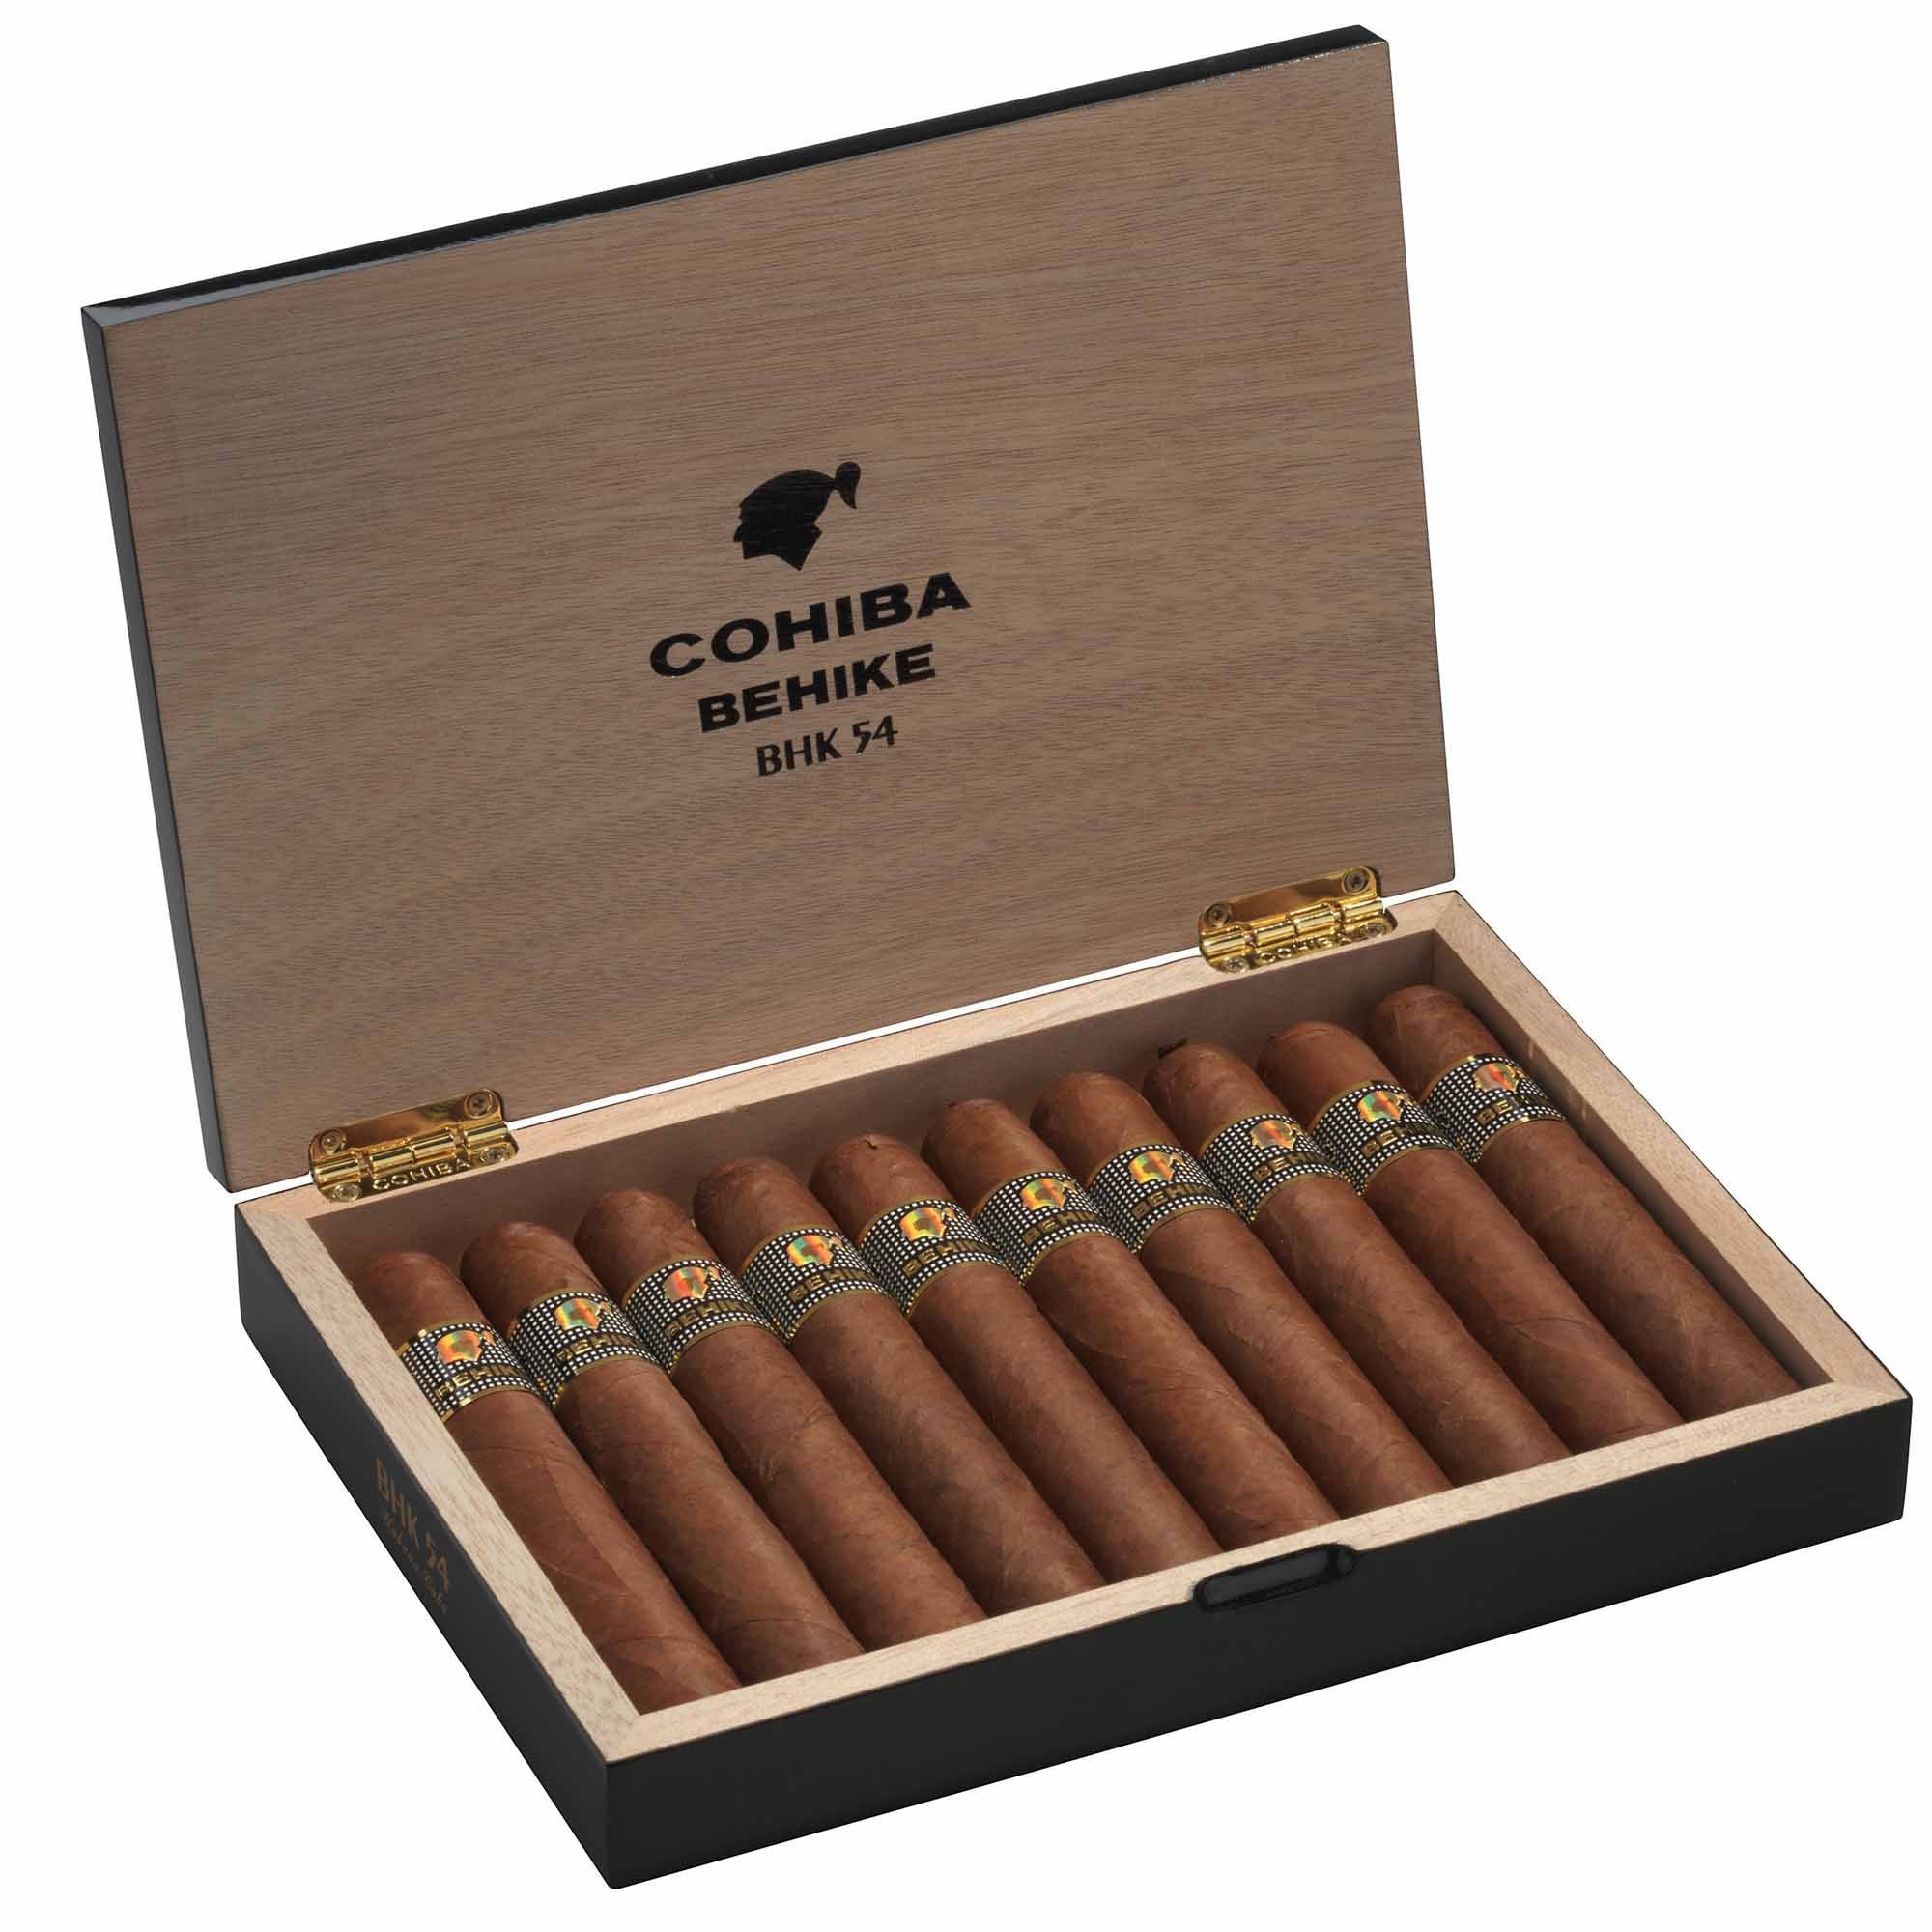 Cohiba Behike 54 Zigarre im Laguito No 5 Format 10er Box geöffnet